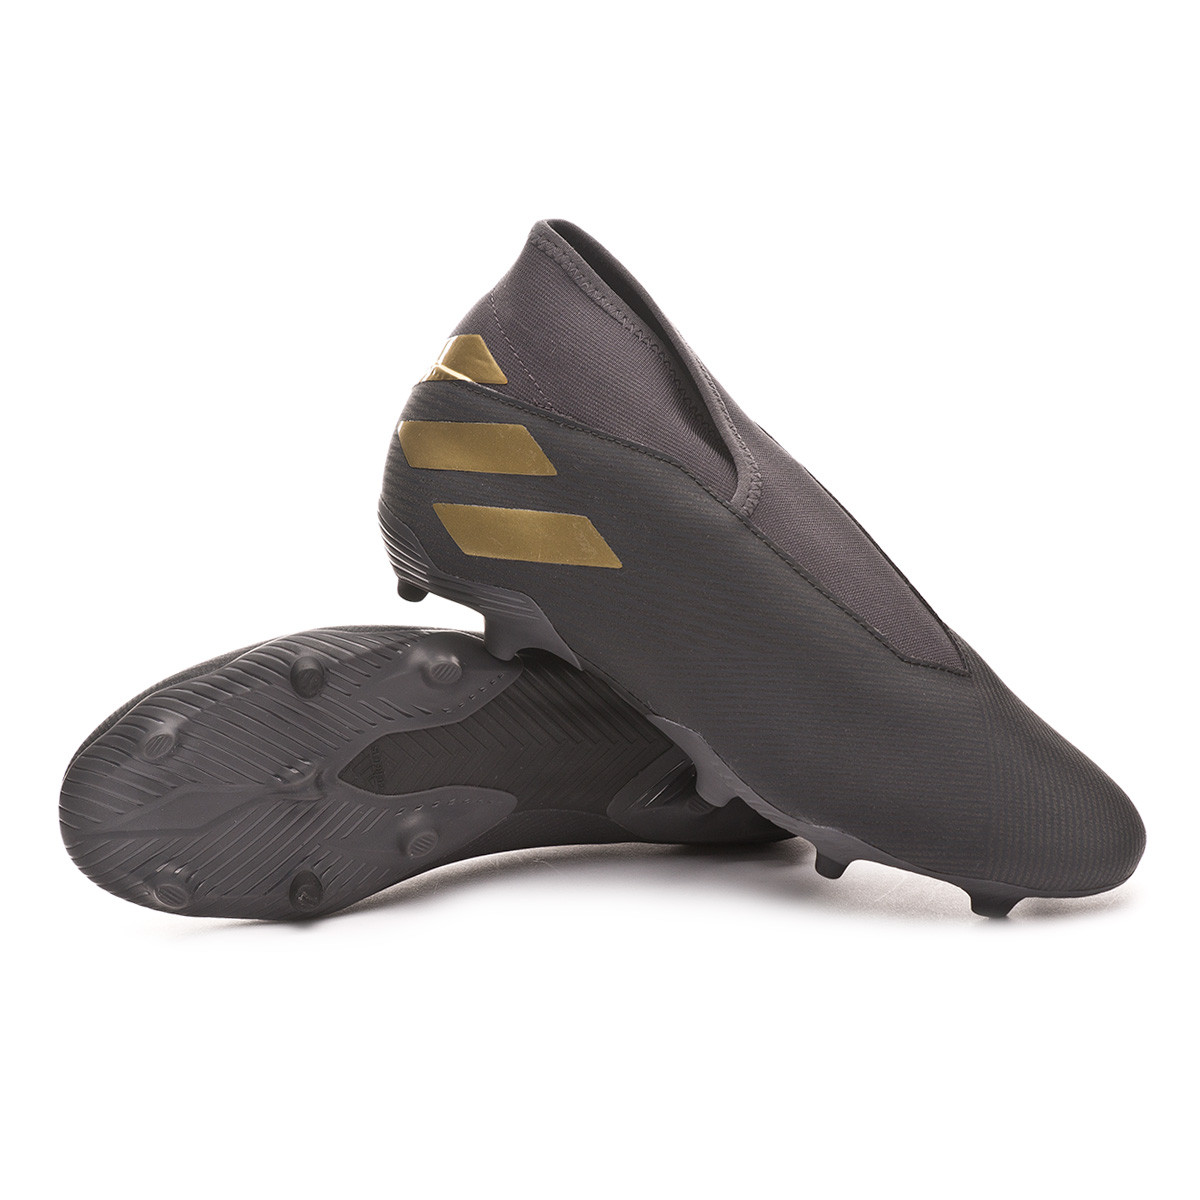 Zapatos de fútbol adidas Nemeziz 19.3 LL FG Core black-Gold  metallic-Utility black - Tienda de fútbol Fútbol Emotion